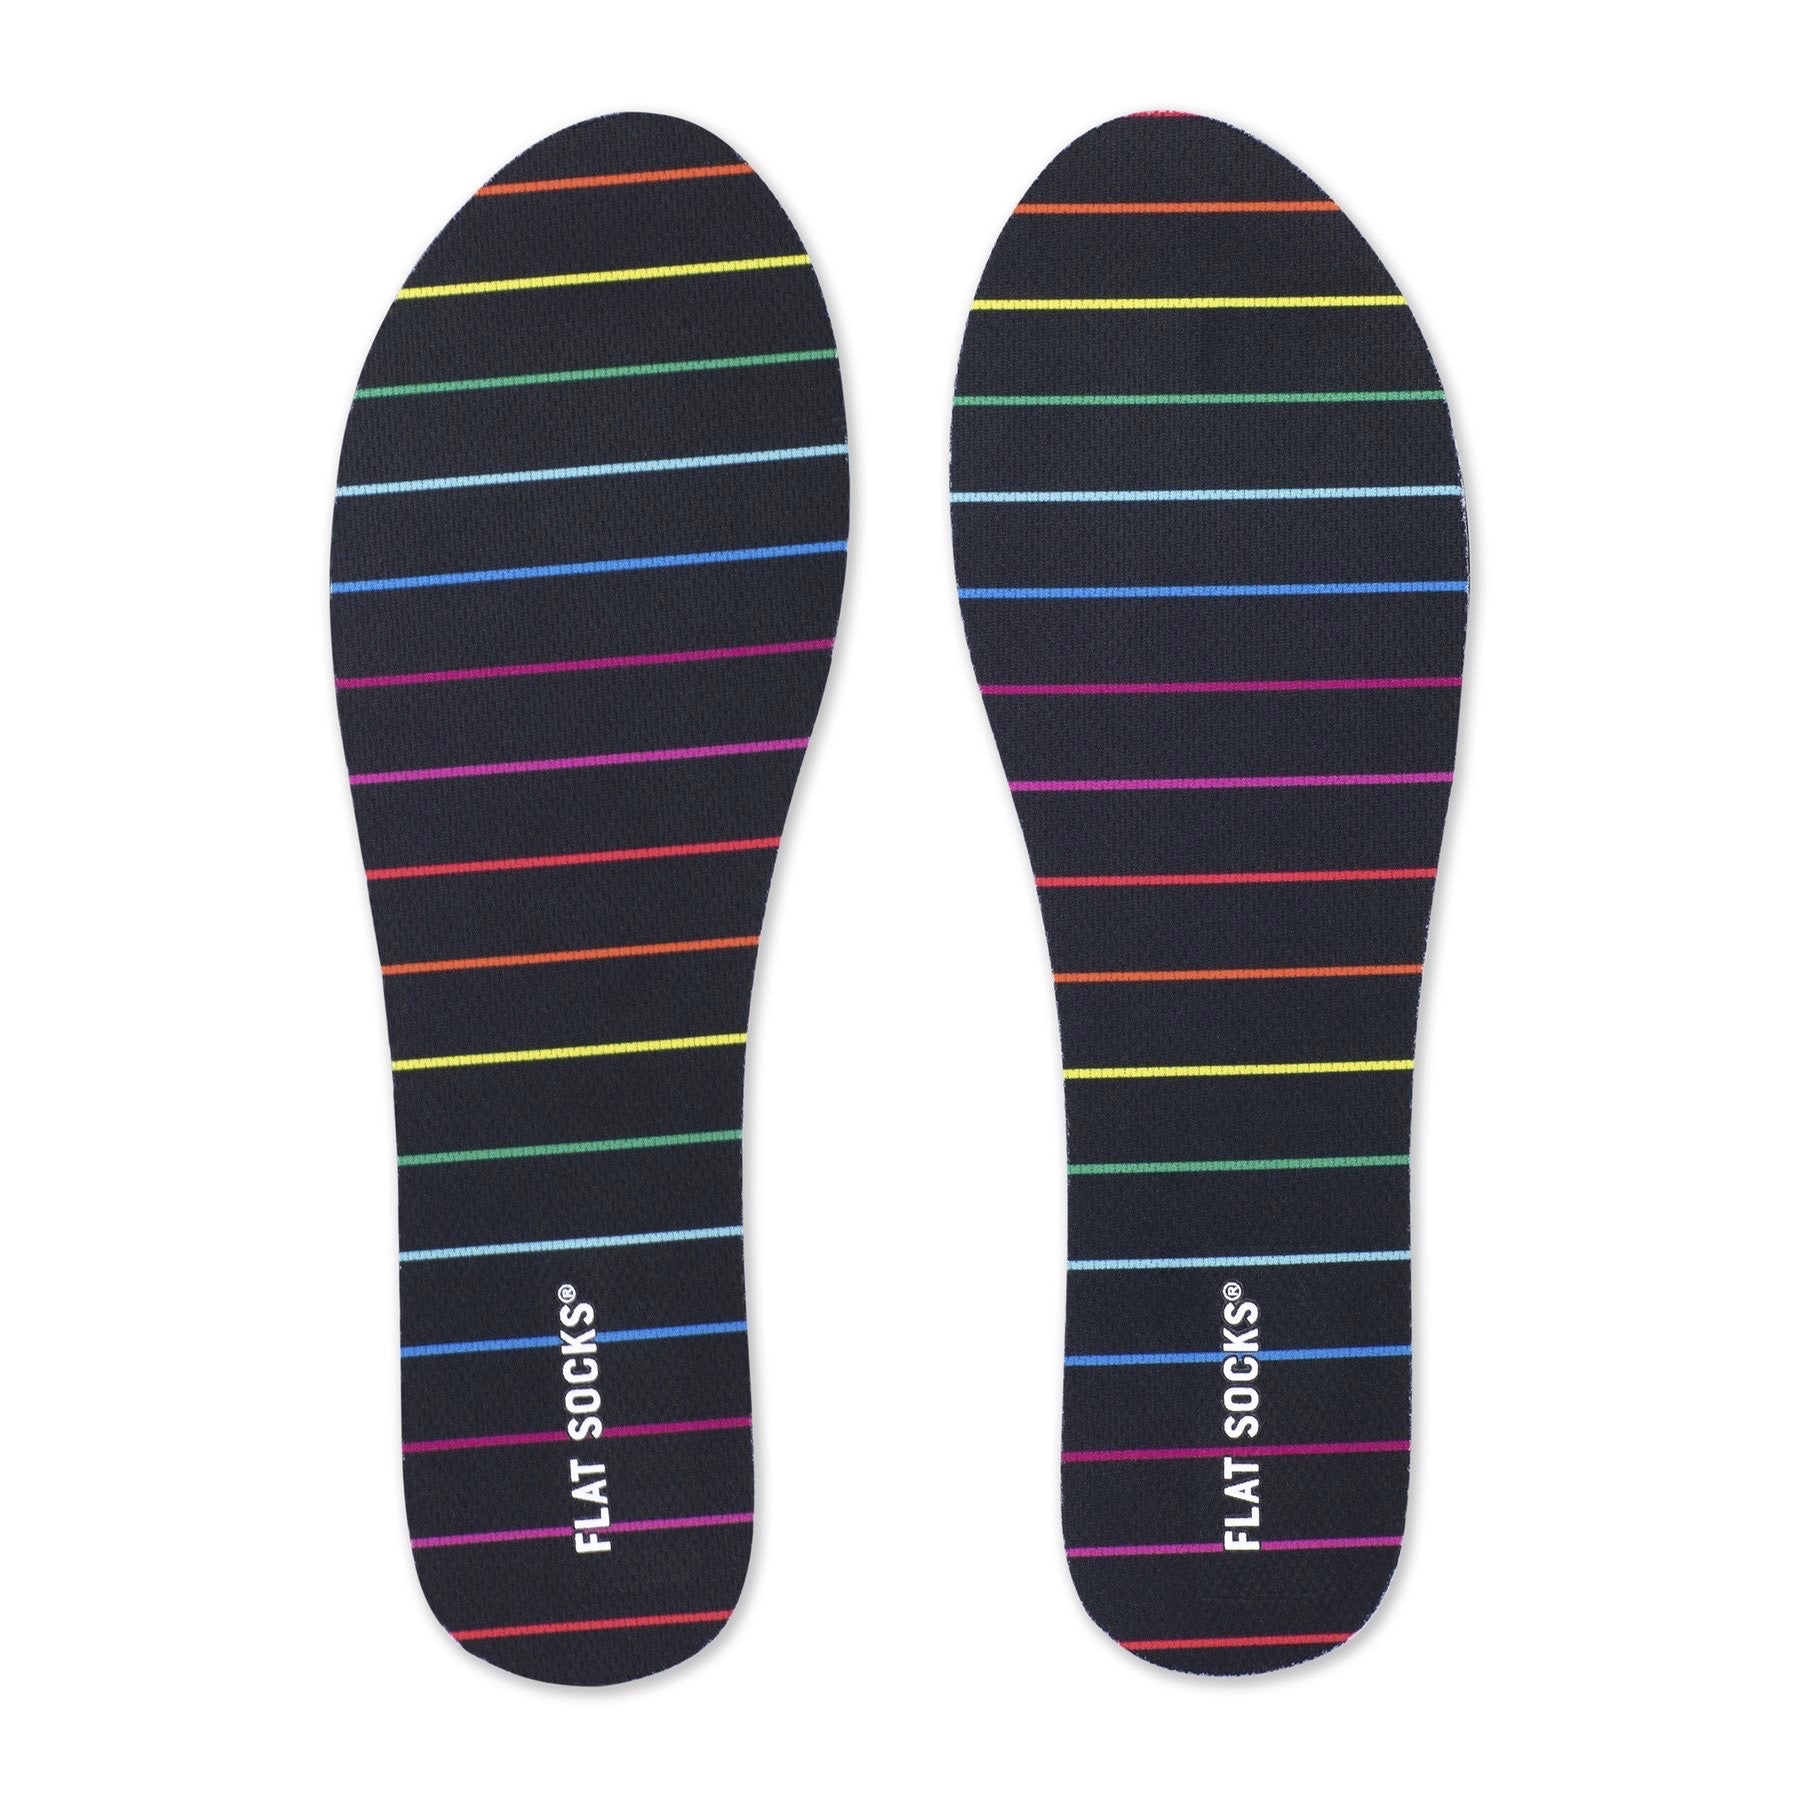 Mesh Flat Socks - Rainbow Pinstripe - The Storehouse Flats